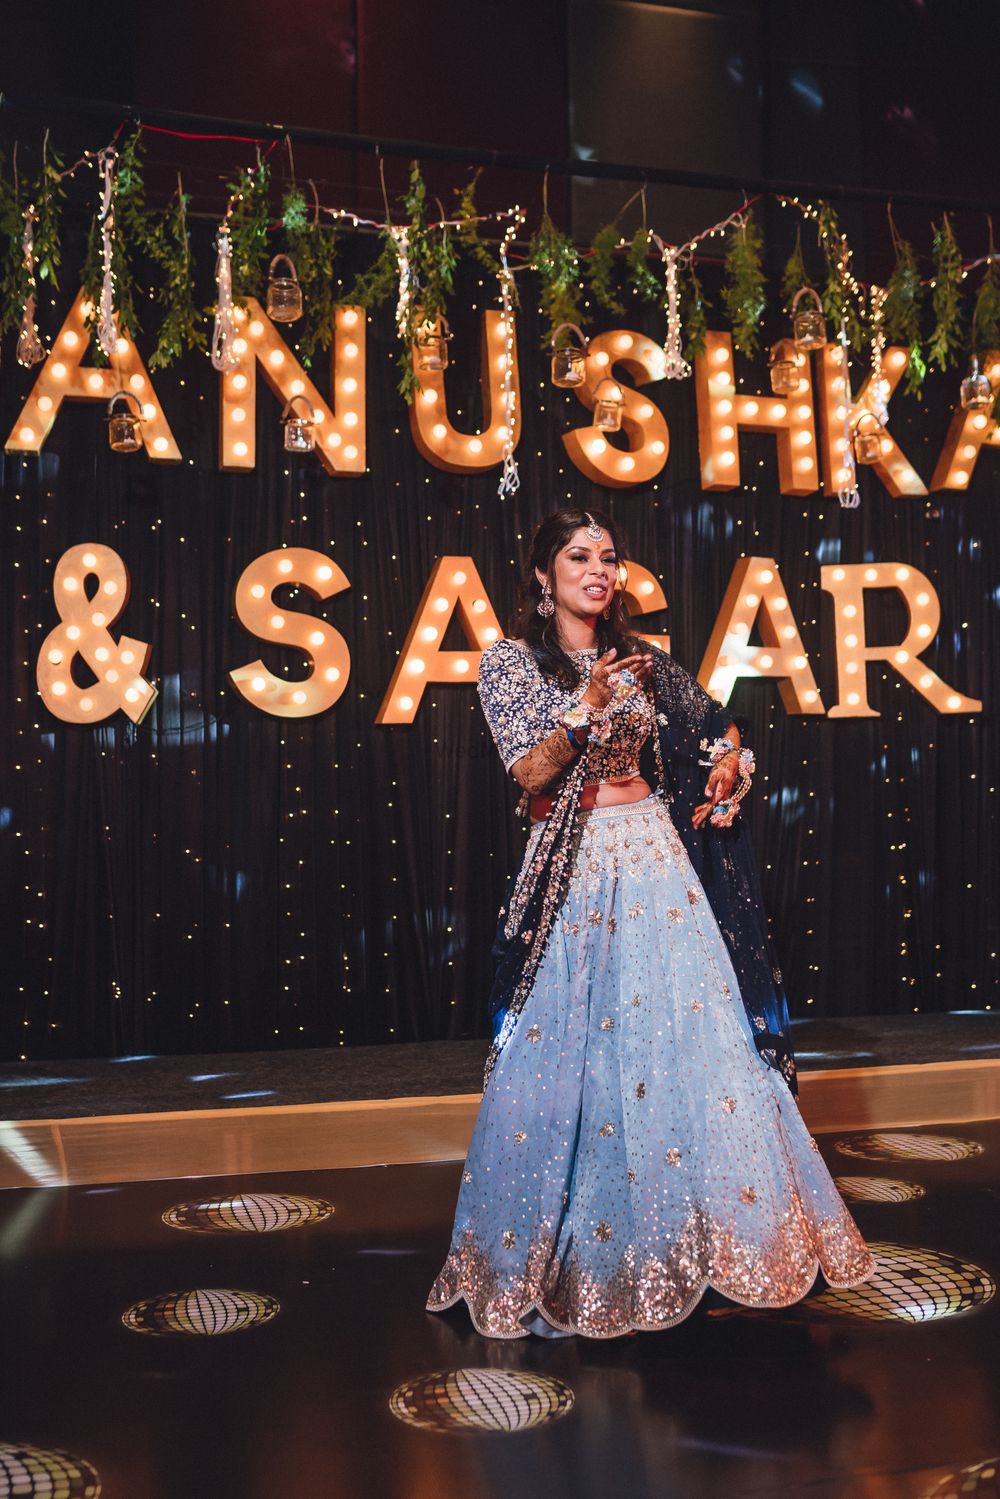 Photo From Anushka & Sagar - By Studio W- Photography & Live Stream Experts